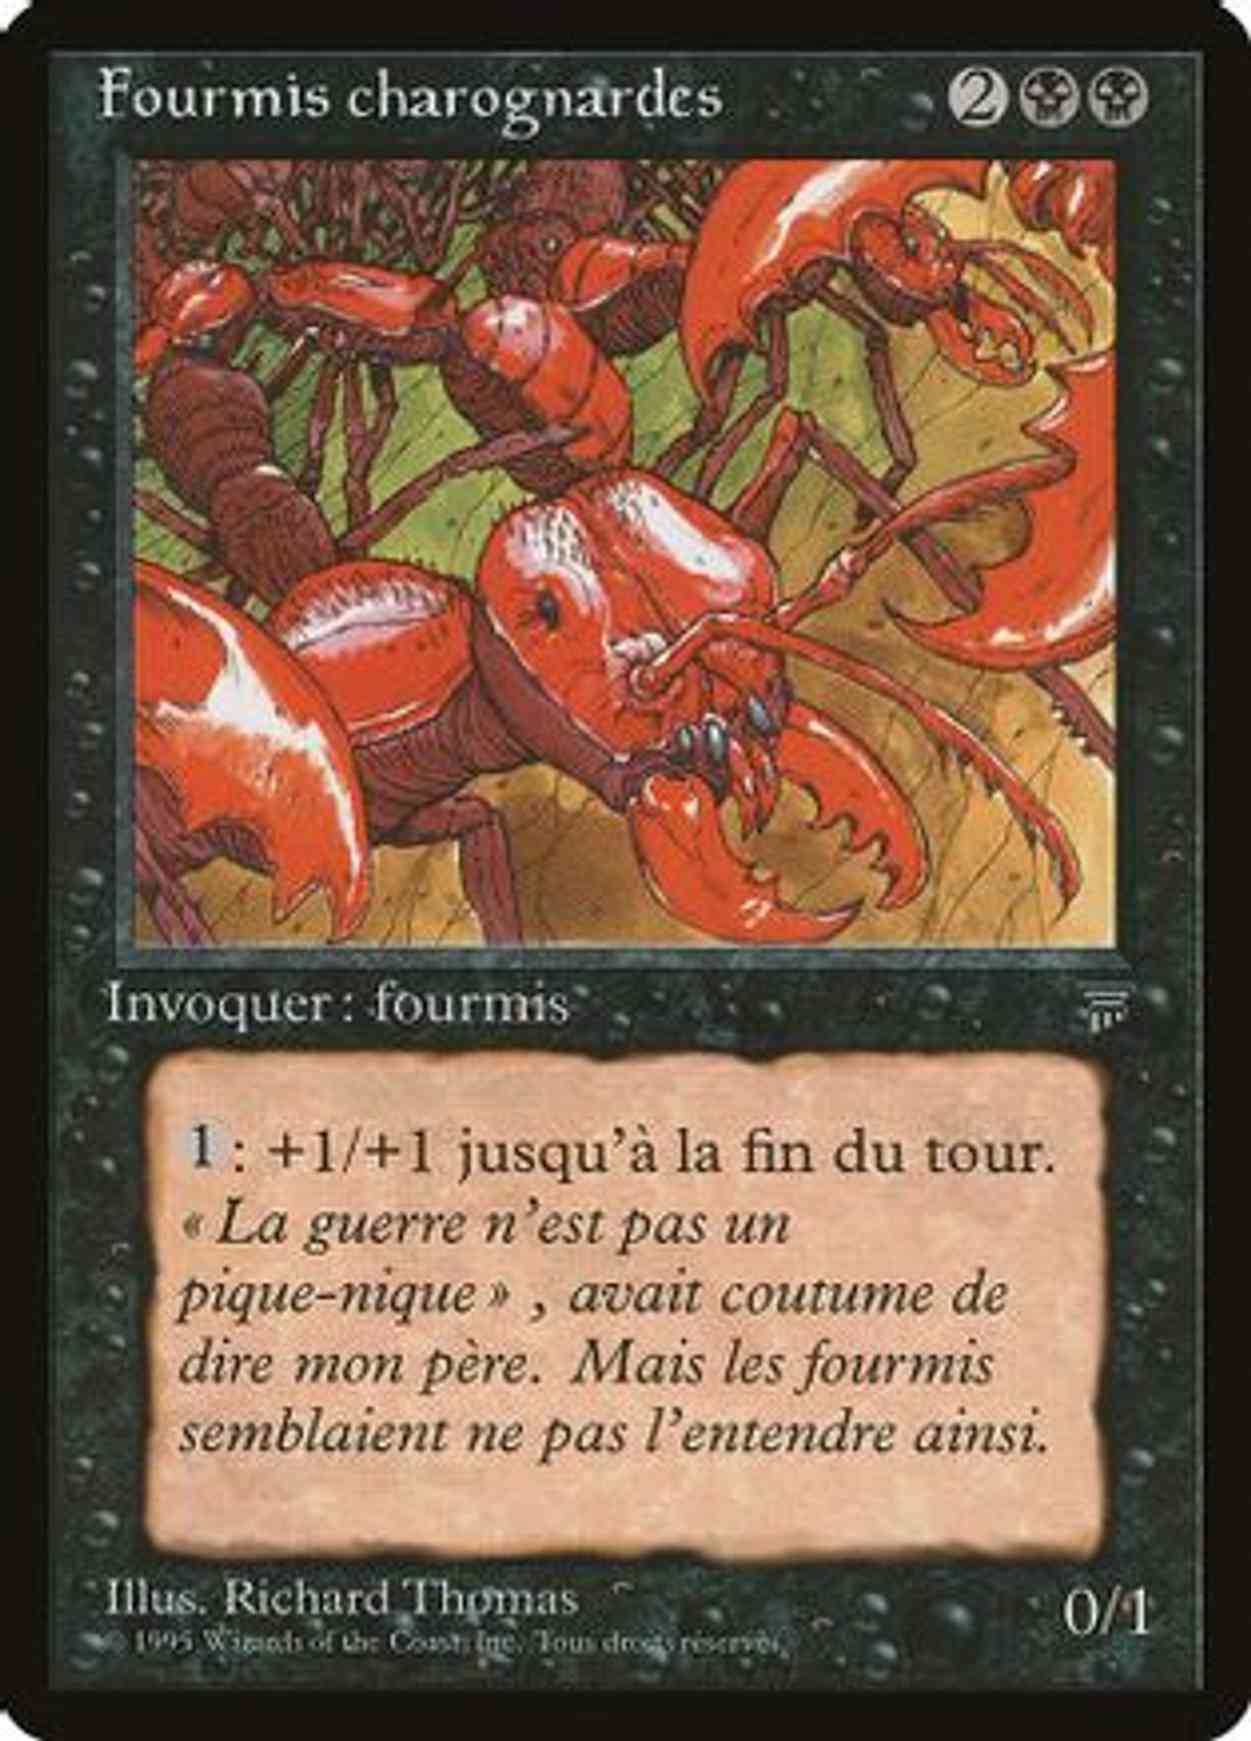 Carrion Ants (French) - "Fourmis charognardes" magic card front